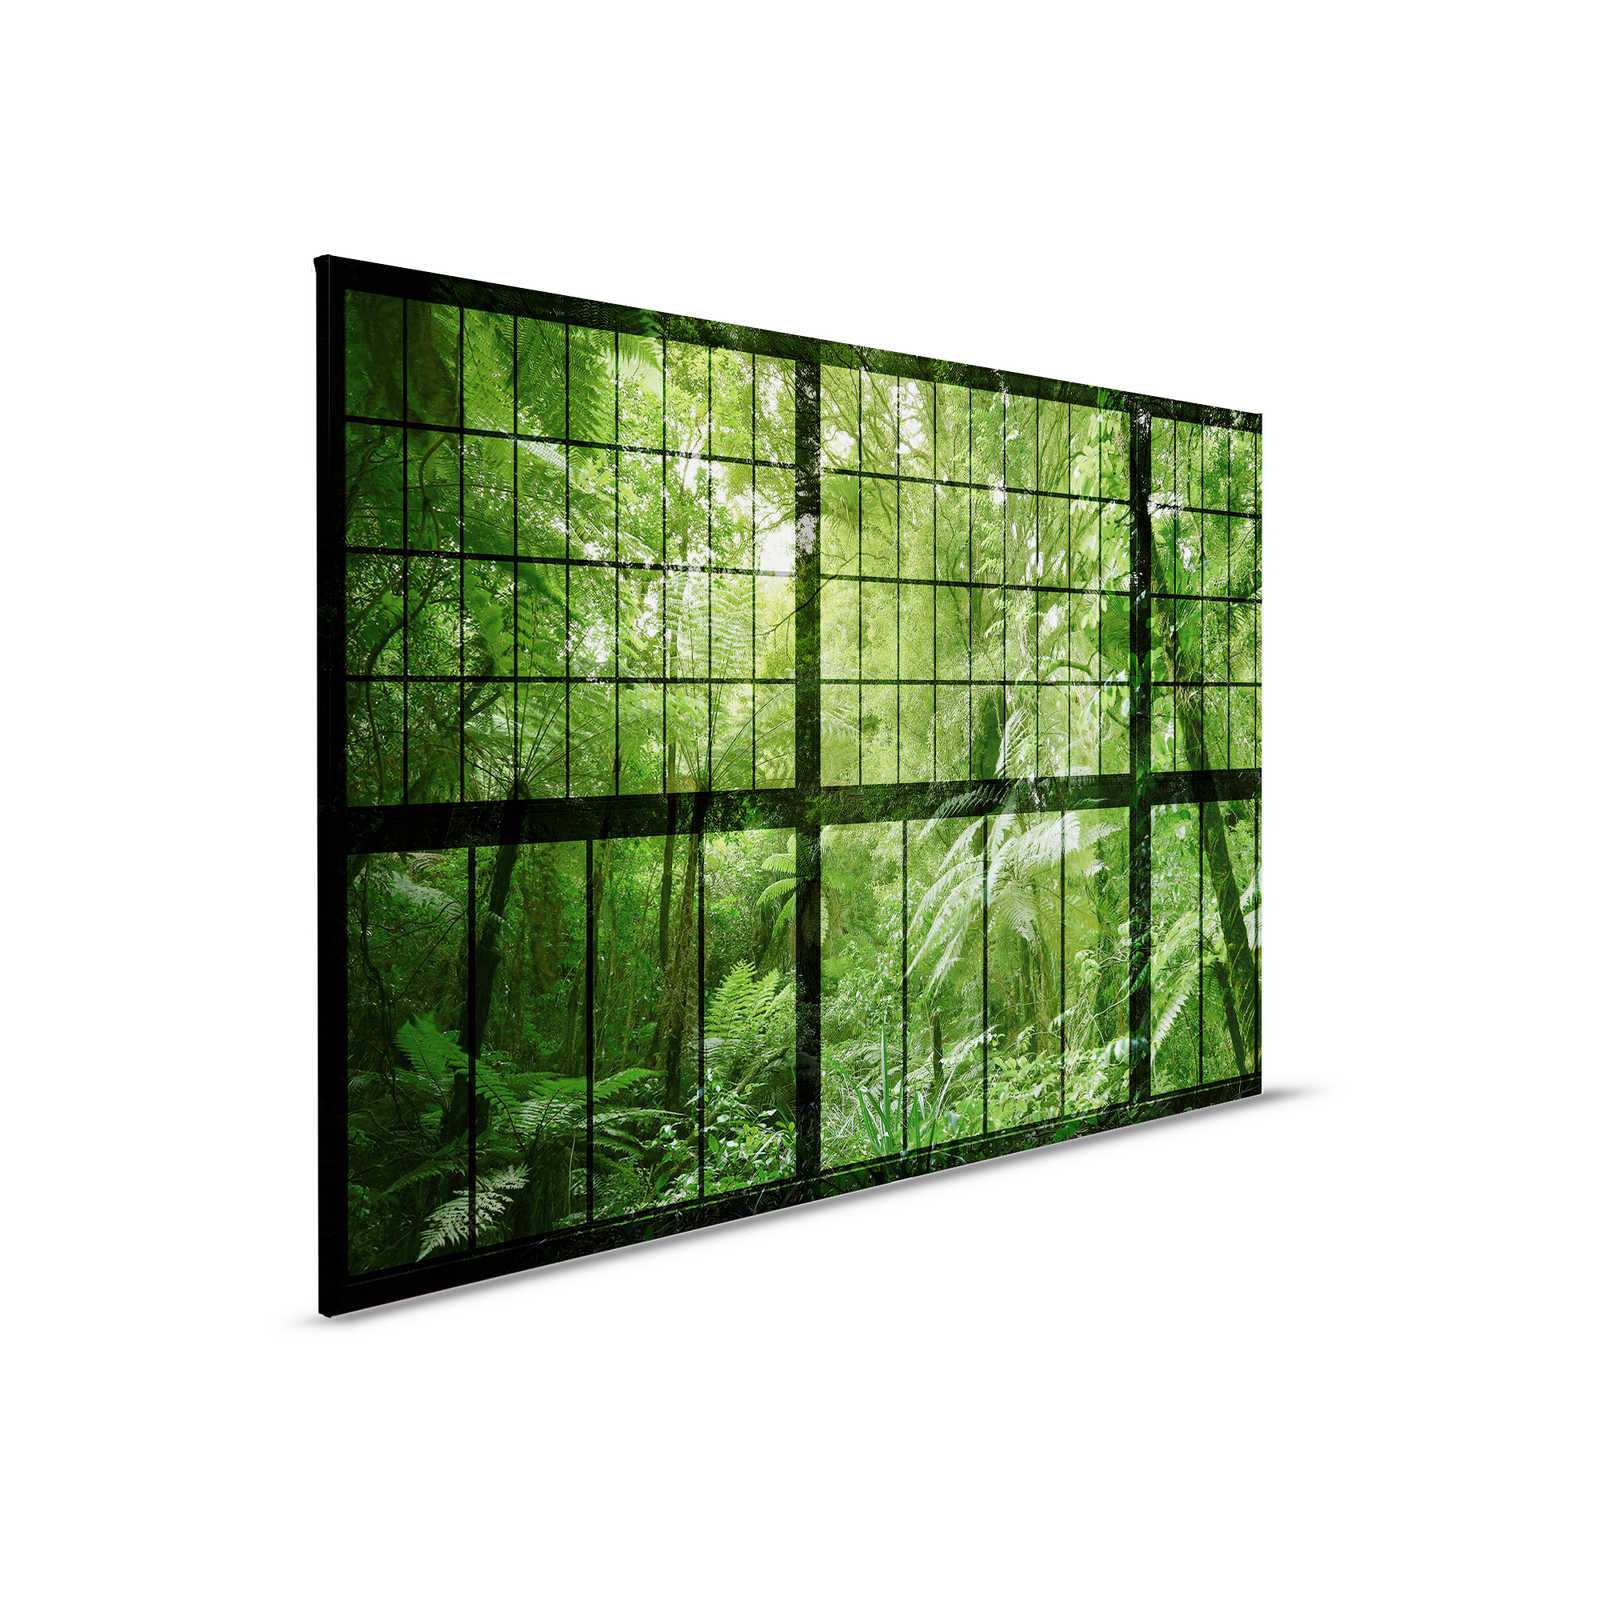         Rainforest 2 - Loft window canvas painting with jungle view - 0.90 m x 0.60 m
    